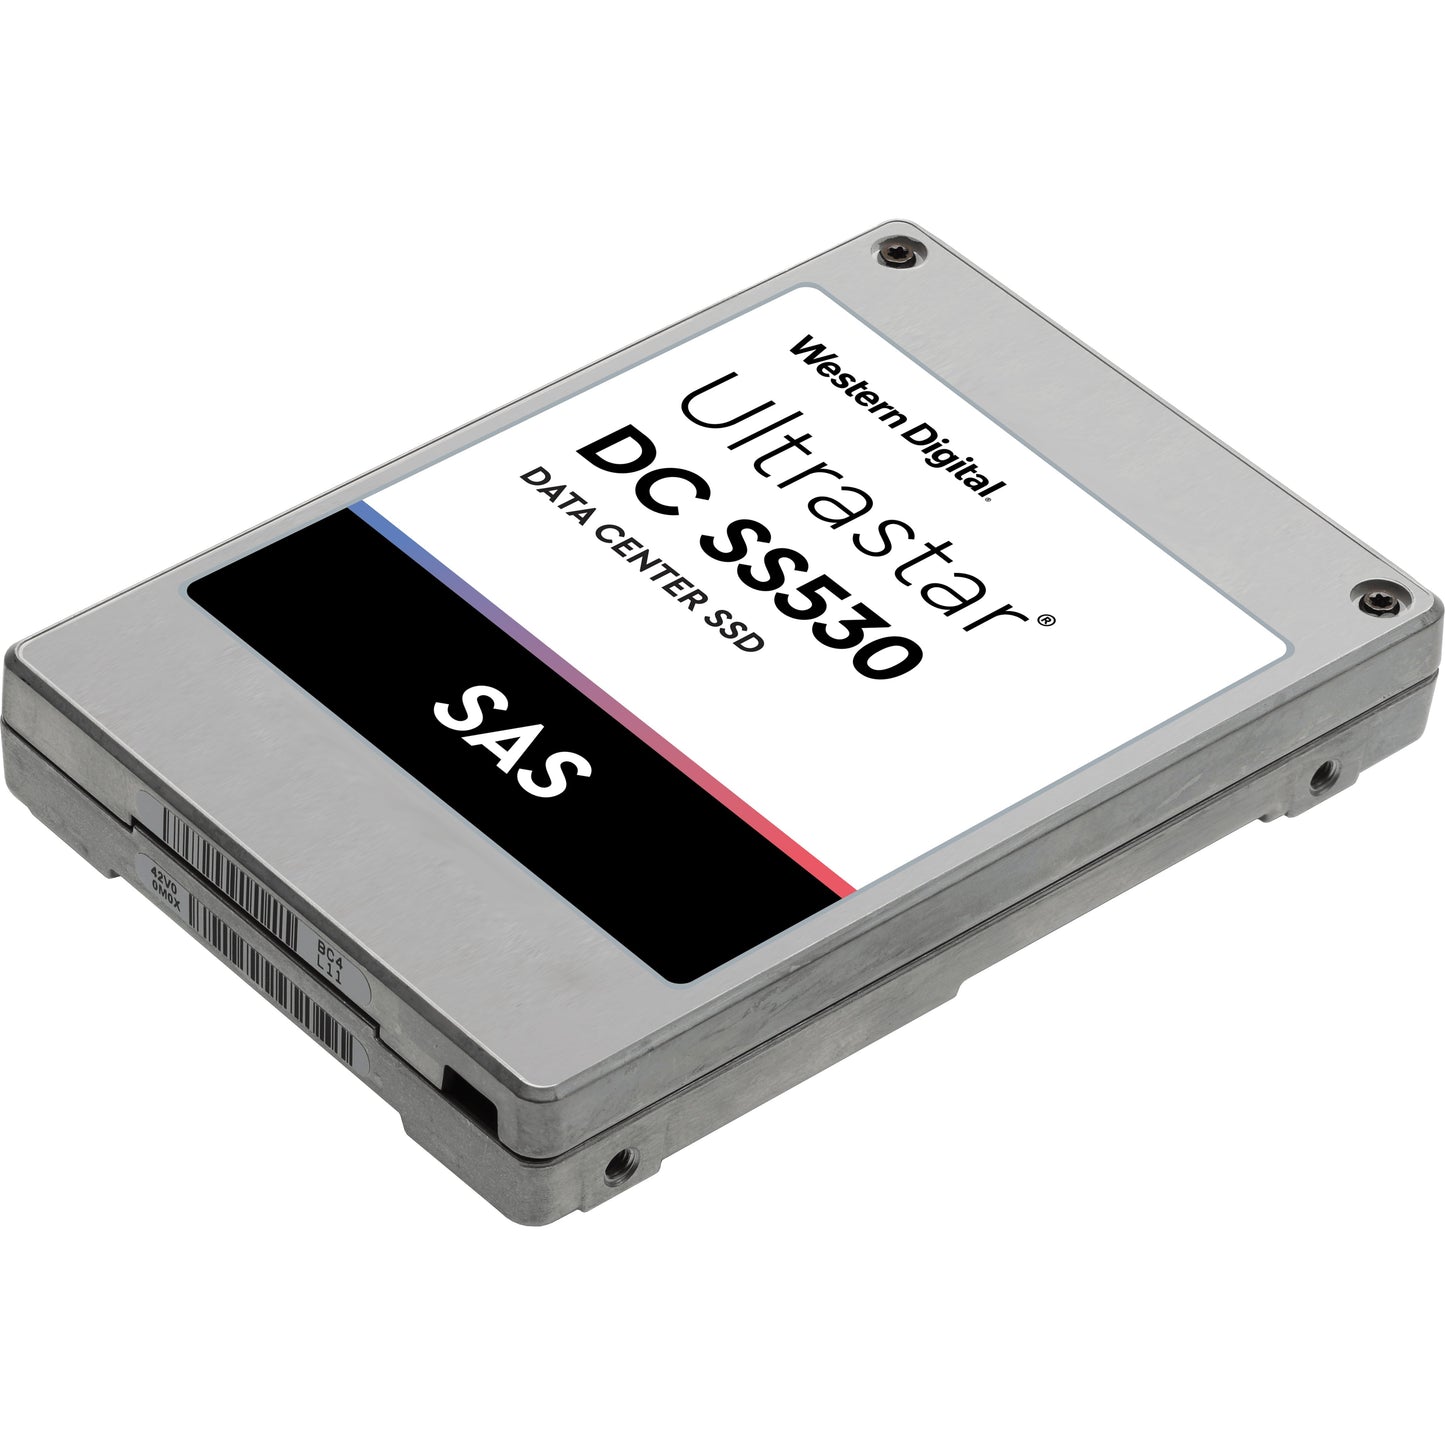 Western Digital Ultrastar DC SS530 WUSTR1596ASS201 960 GB Solid State Drive - 2.5" Internal - SAS (12Gb/s SAS)